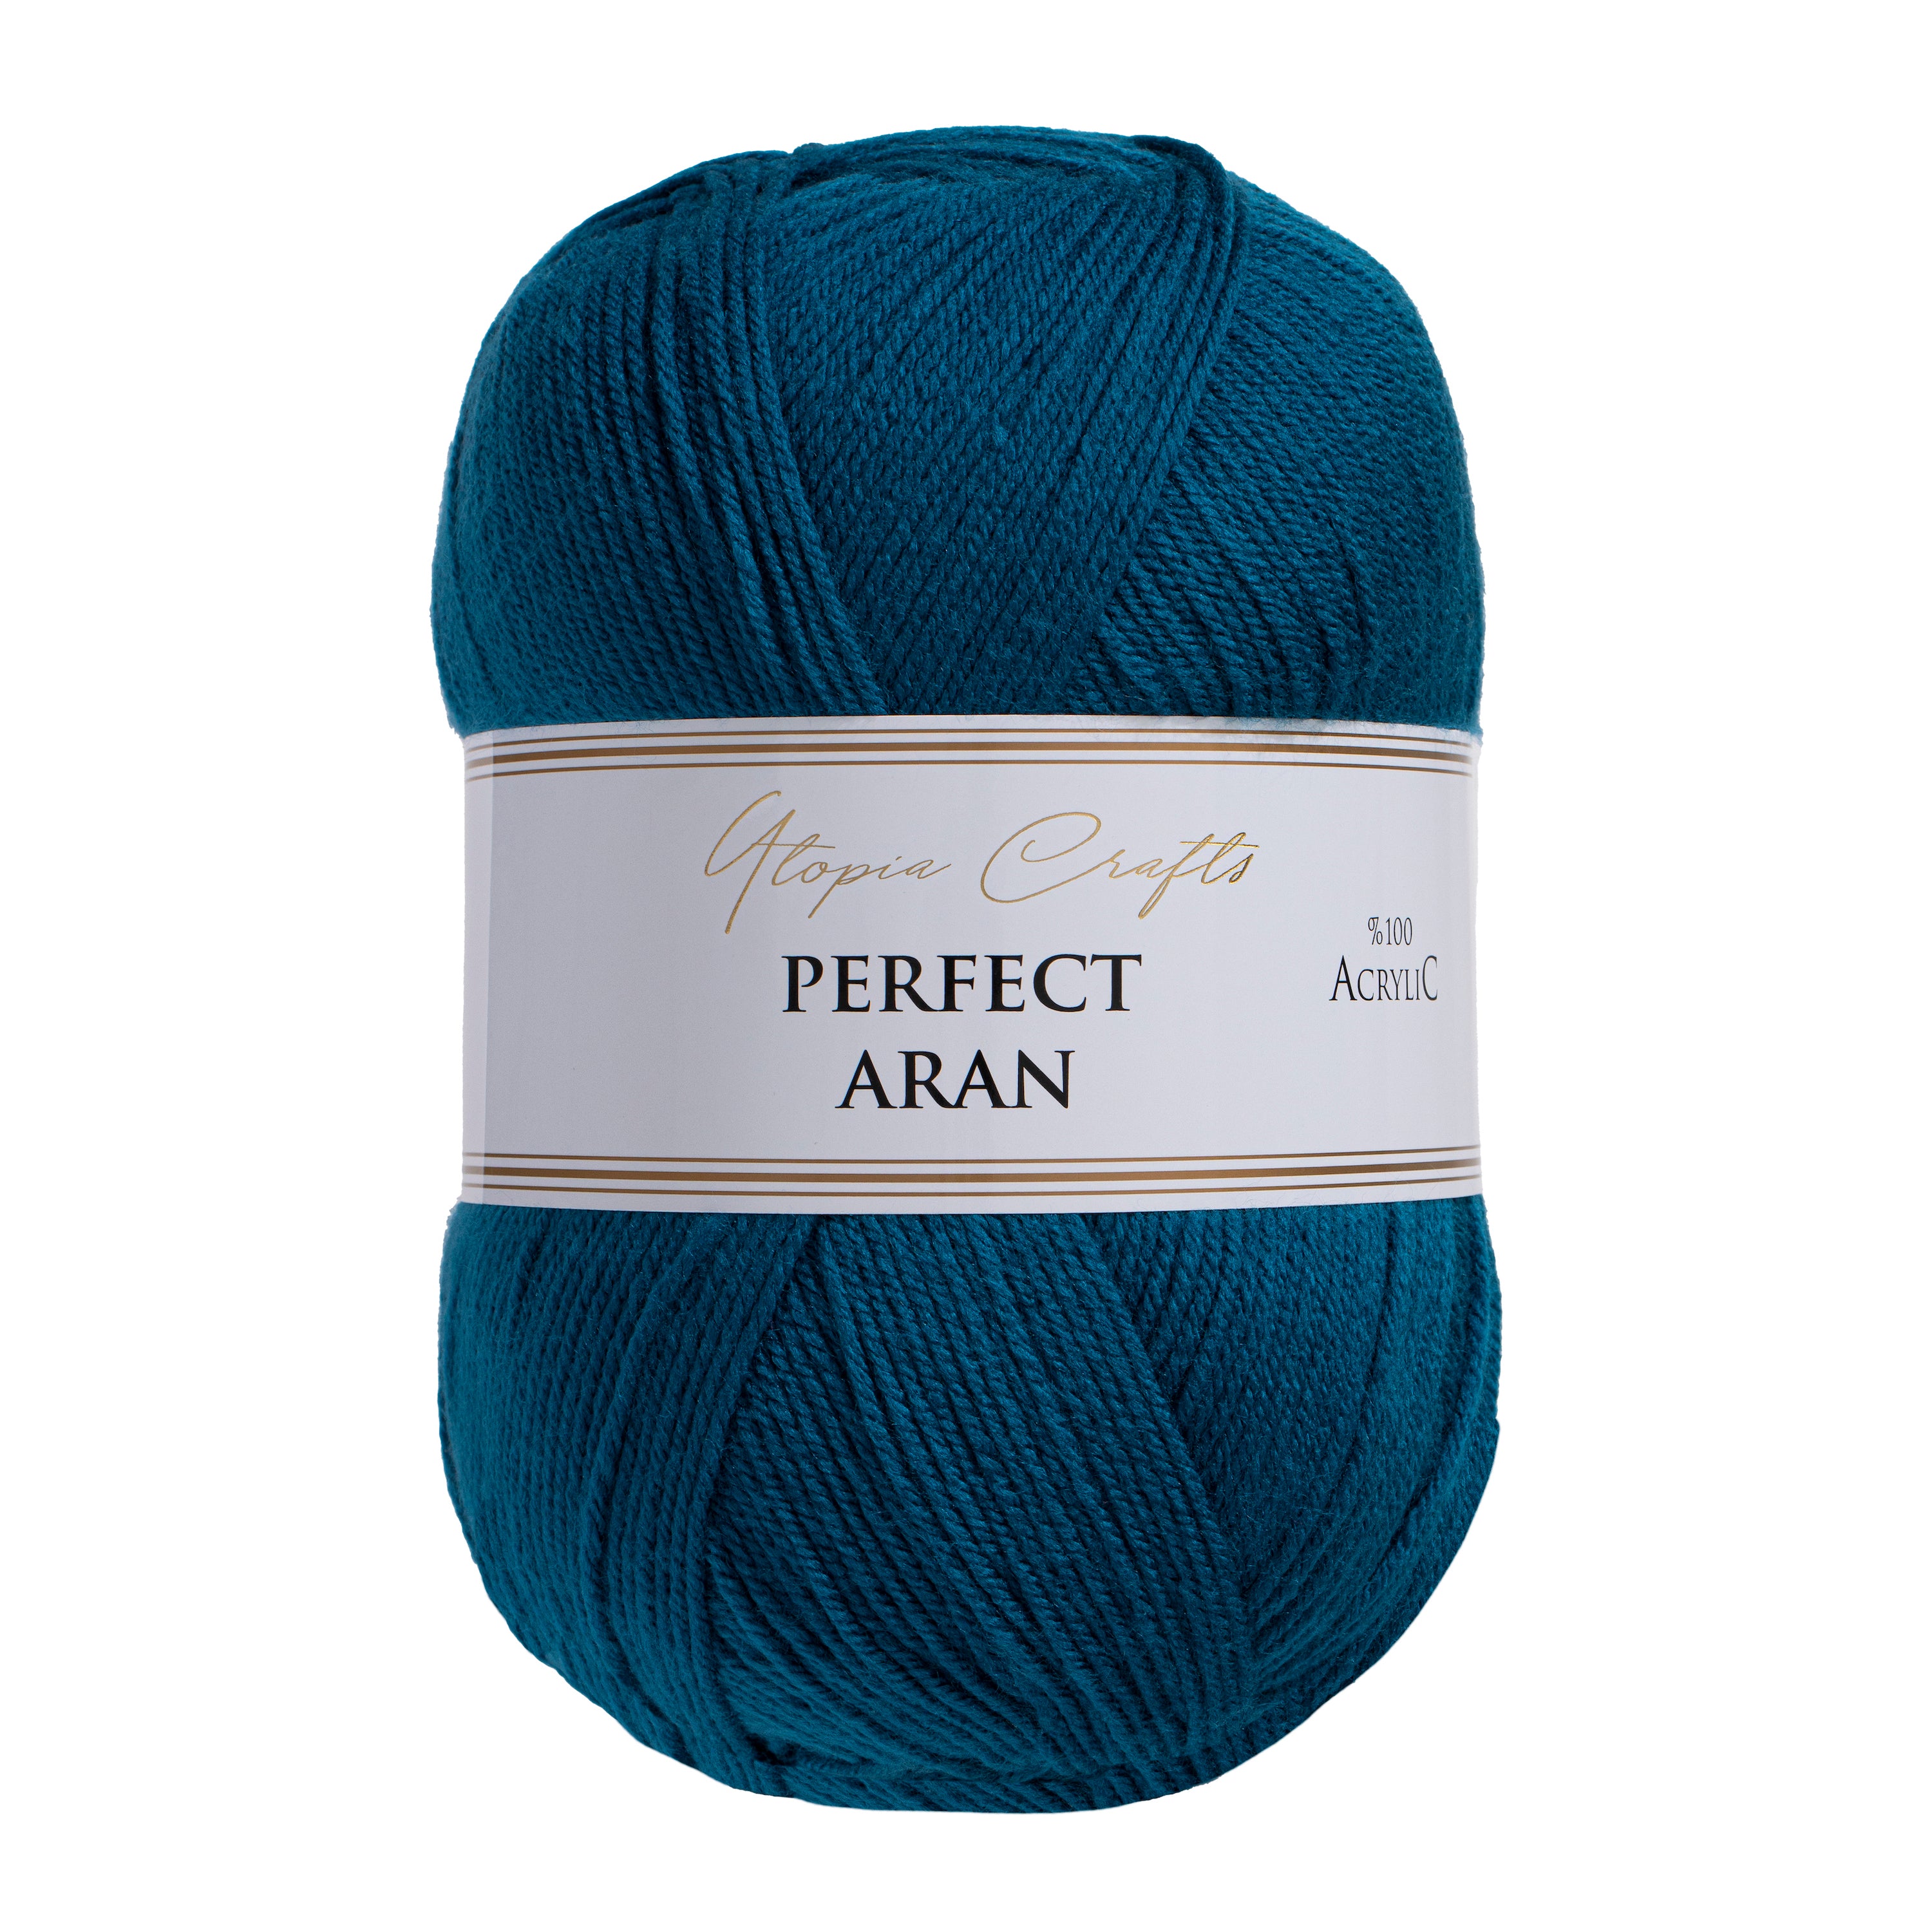 Utopia Crafts Aran Knitting and Crochet Yarn, 400g [Blue Whale]